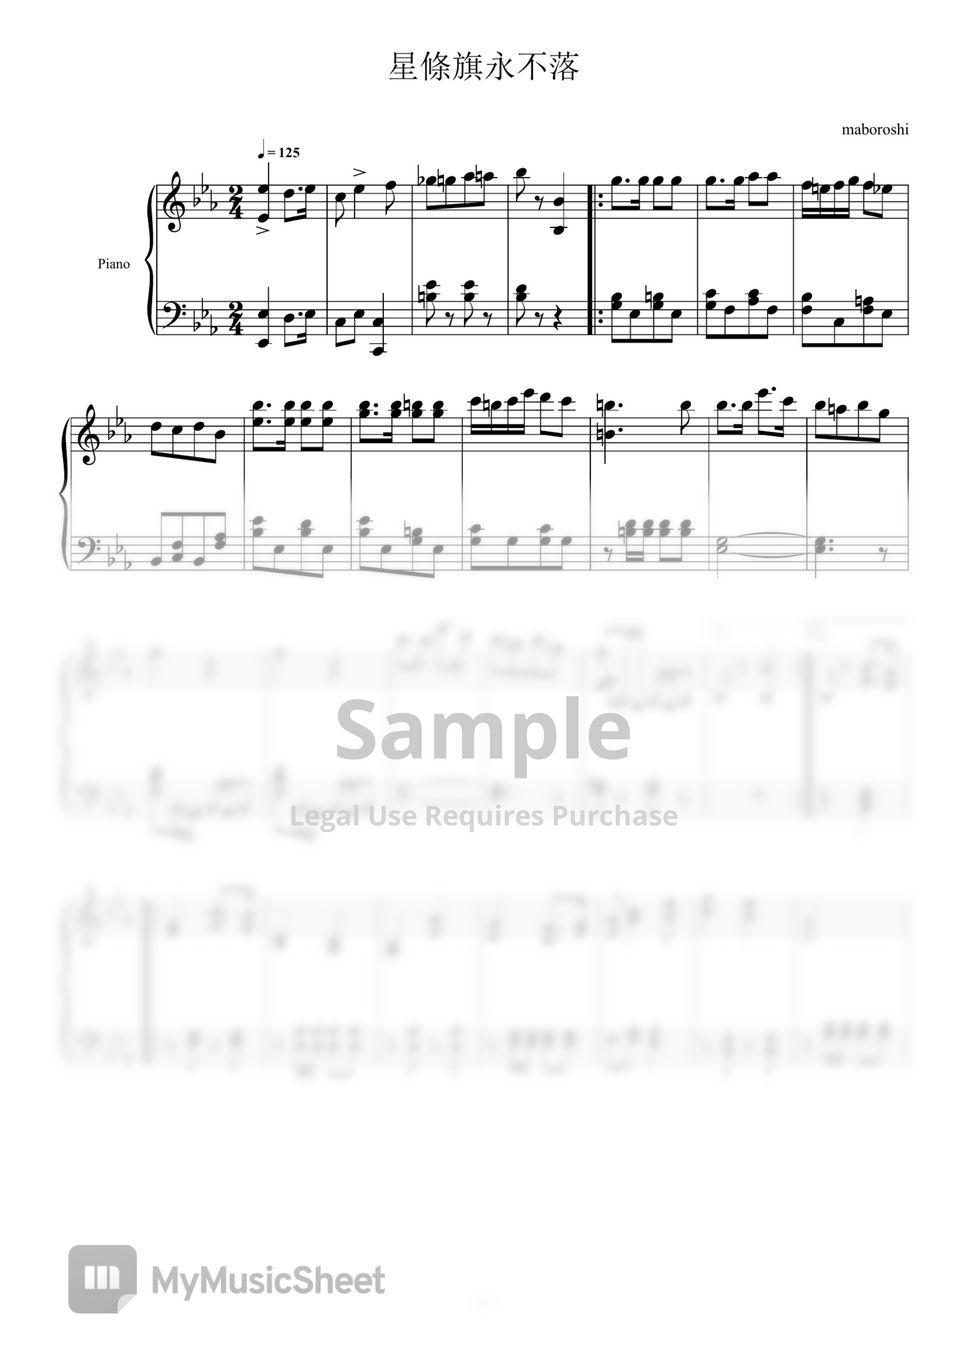 John Philip Sousa - 《星條旗永不落》 - 美國國家進行曲 / piano version by maboroshi